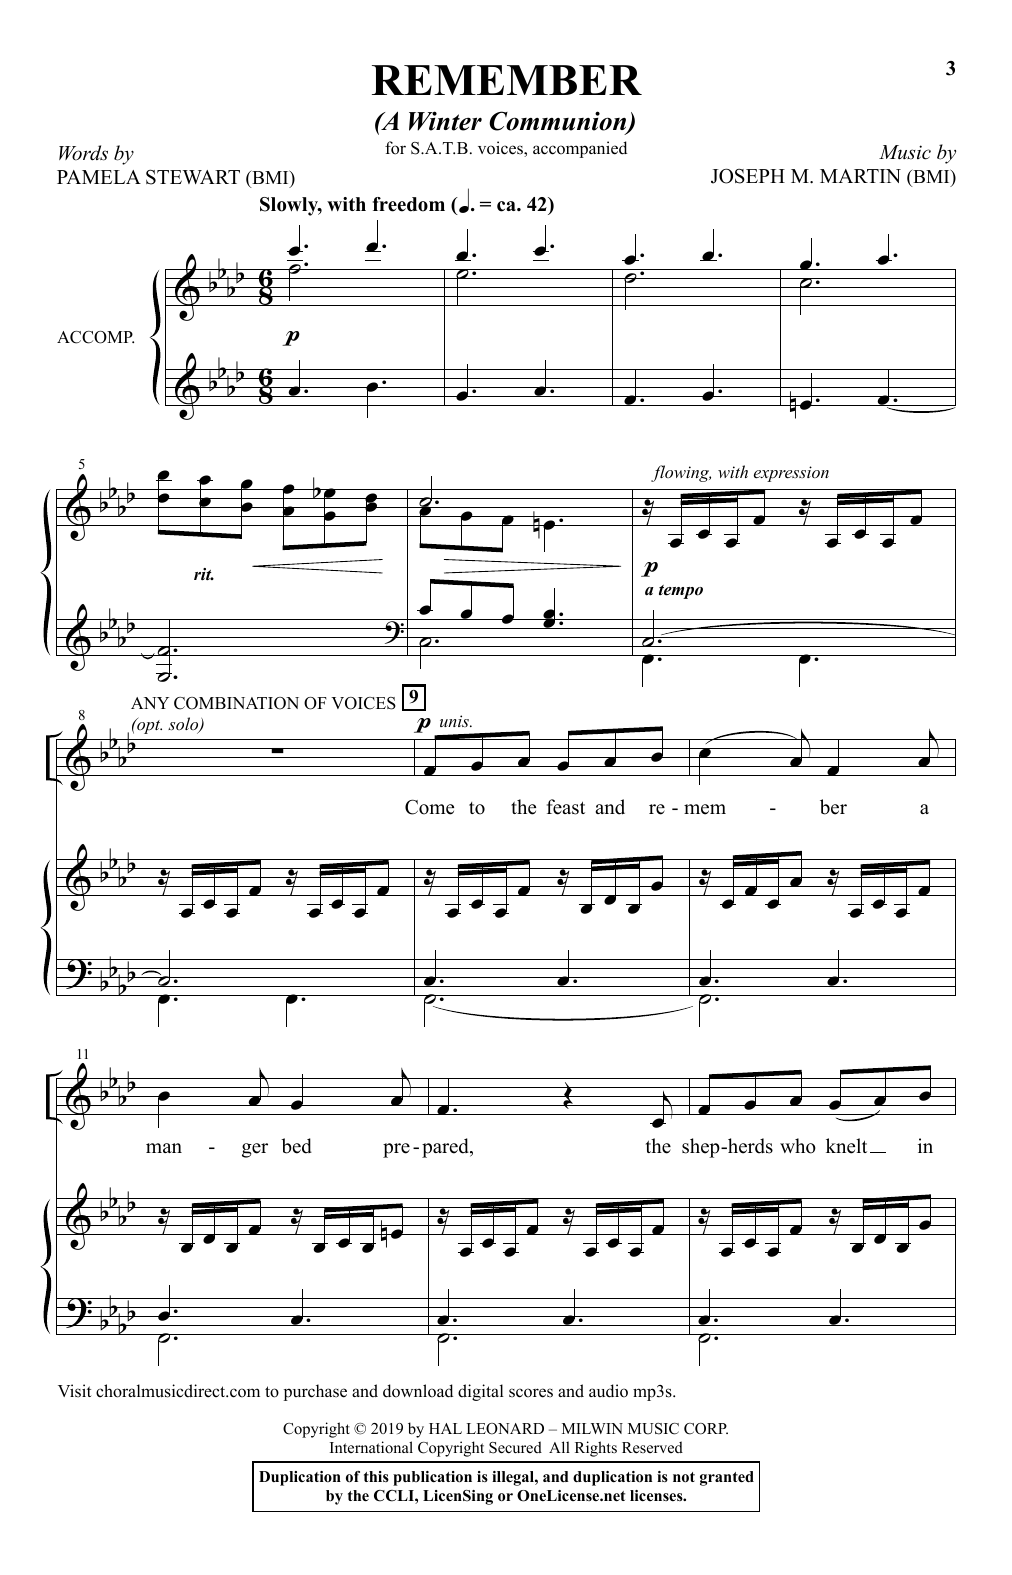 Pamela Stewart & Joseph Martin Remember (A Winter Communion) Sheet Music Notes & Chords for SATB Choir - Download or Print PDF